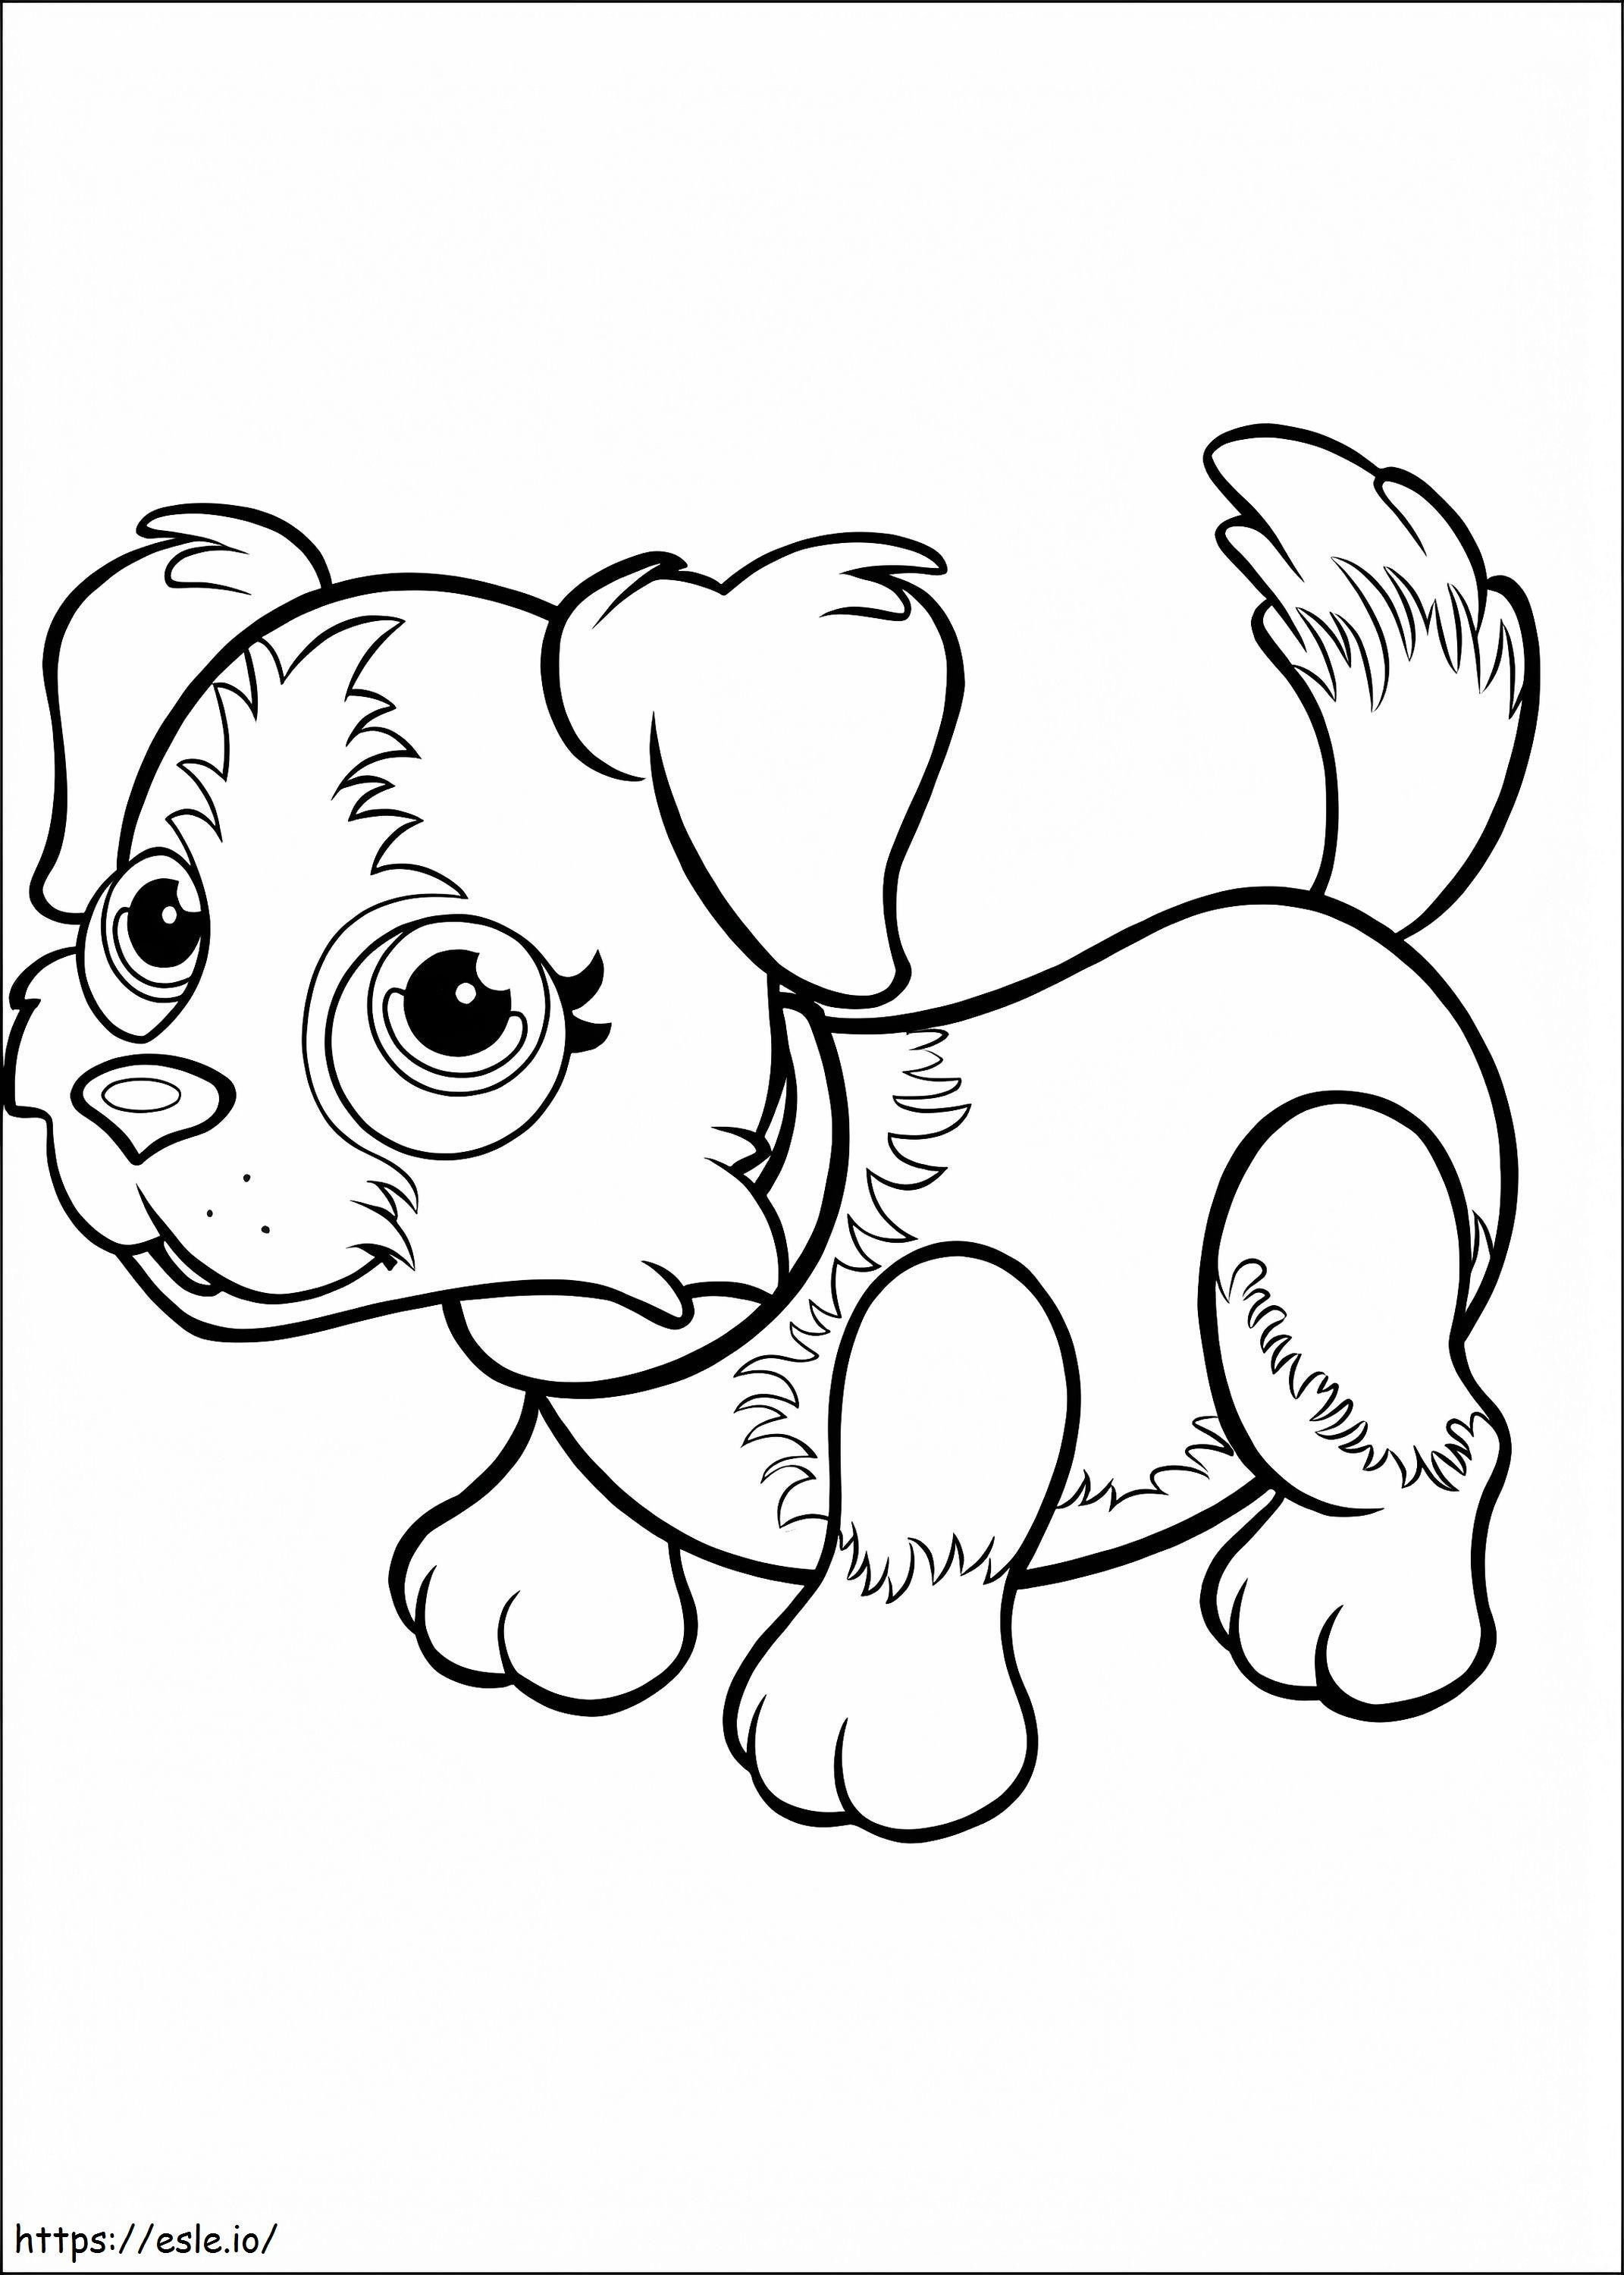 Desfile de mascotas imprimible gratis para colorear